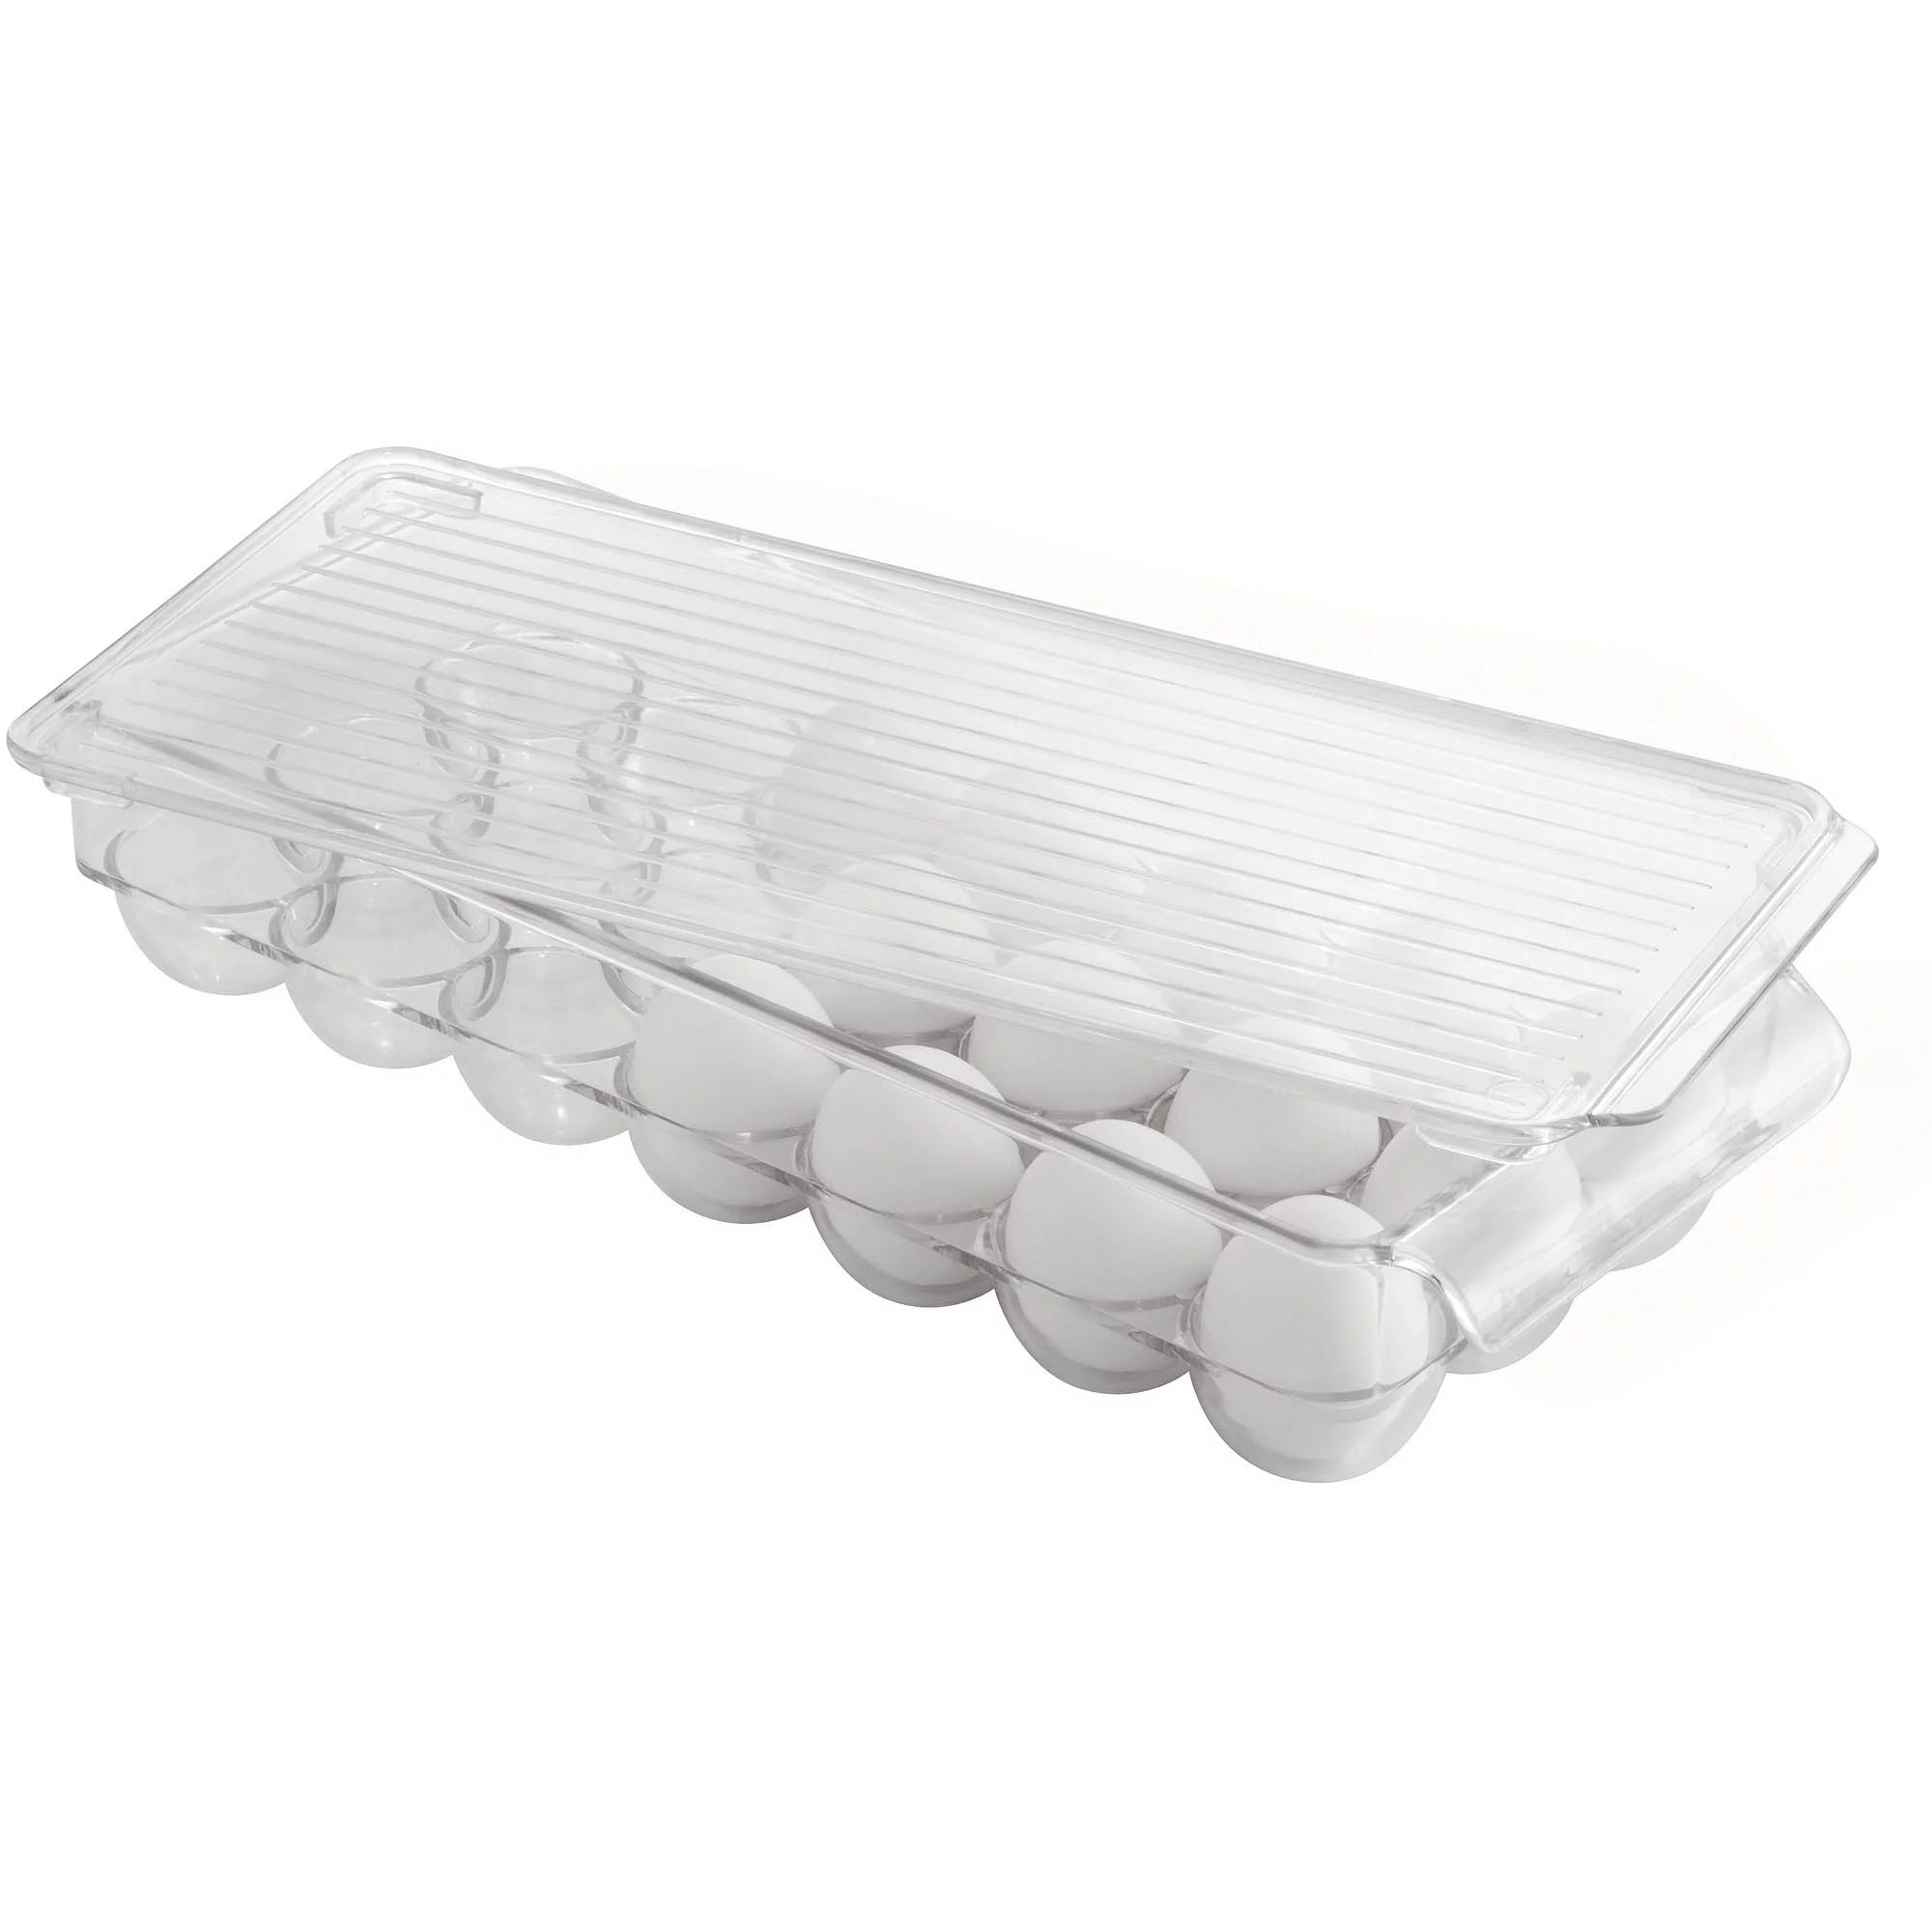 InterDesign Fridge Binz 21-Egg Holder, Plastic - Clear | Walmart (US)